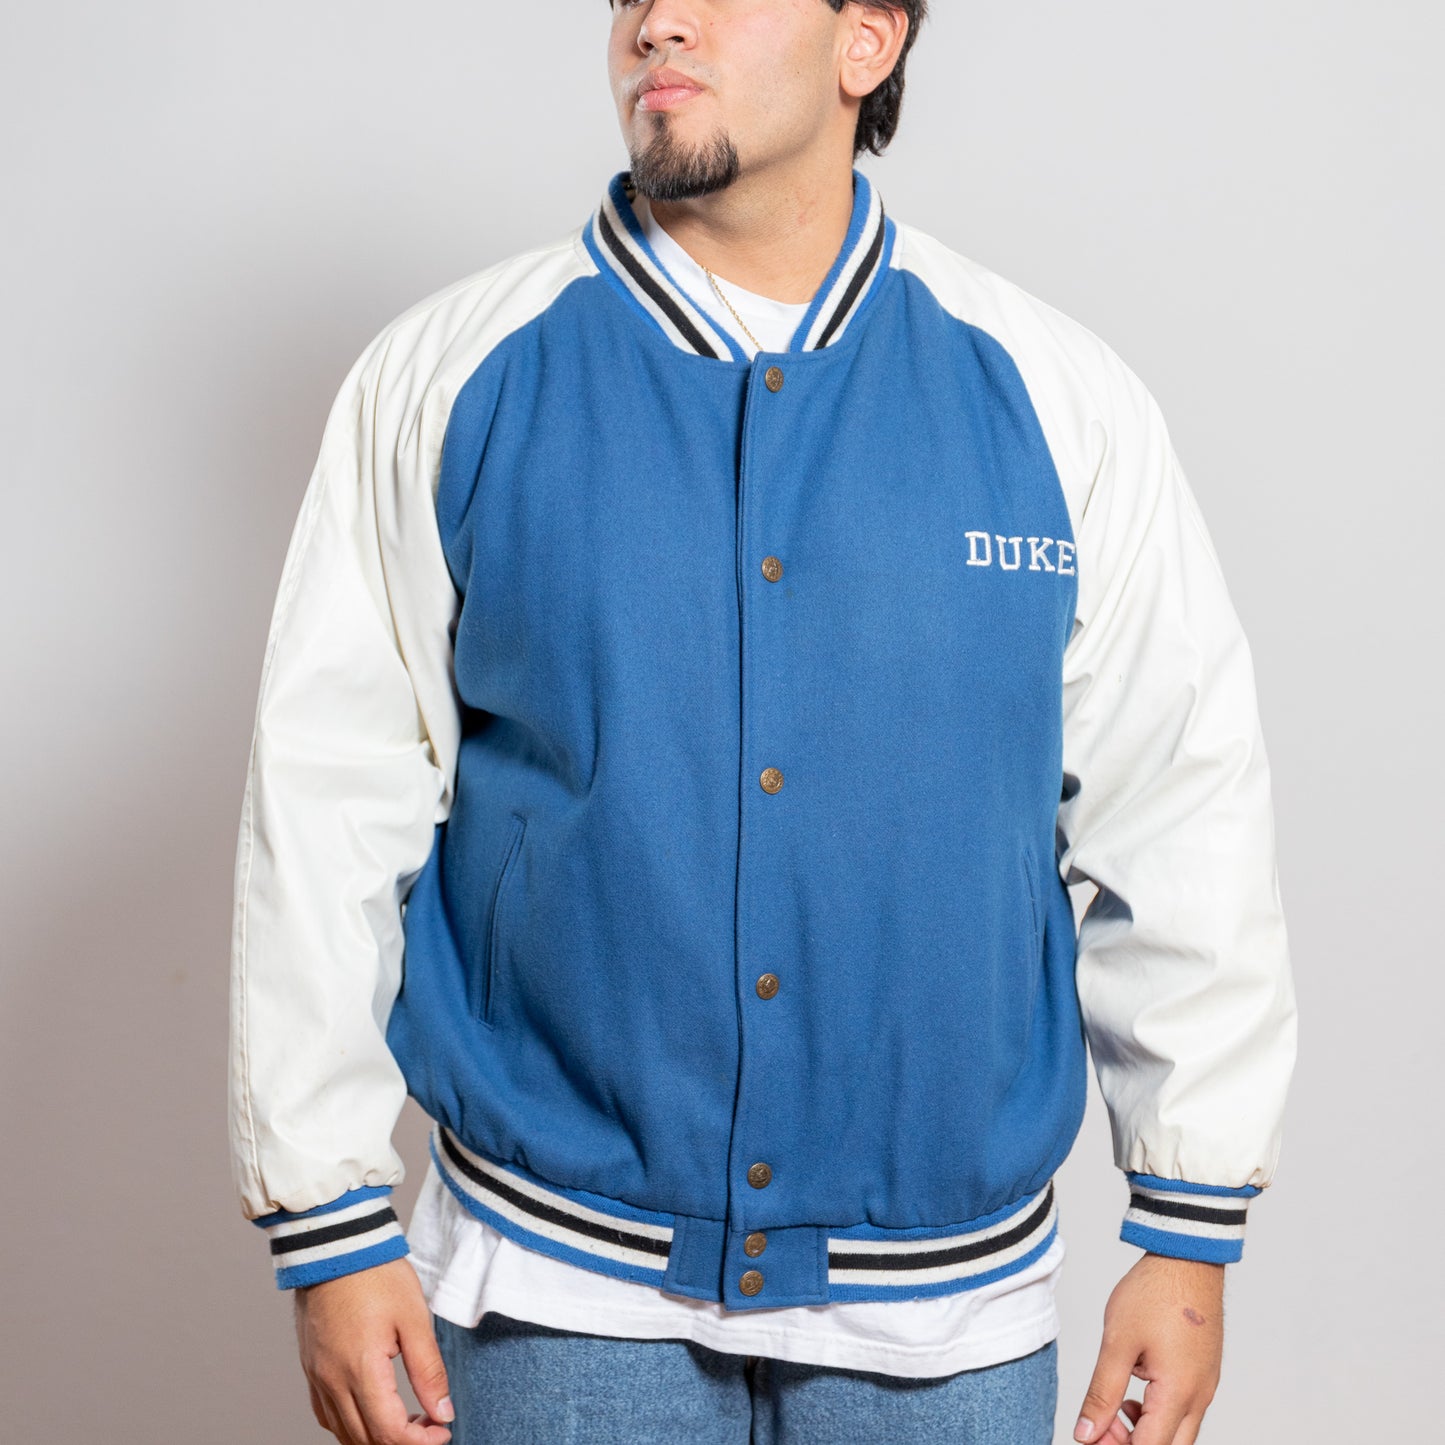 90s Duke University Varsity Jacket